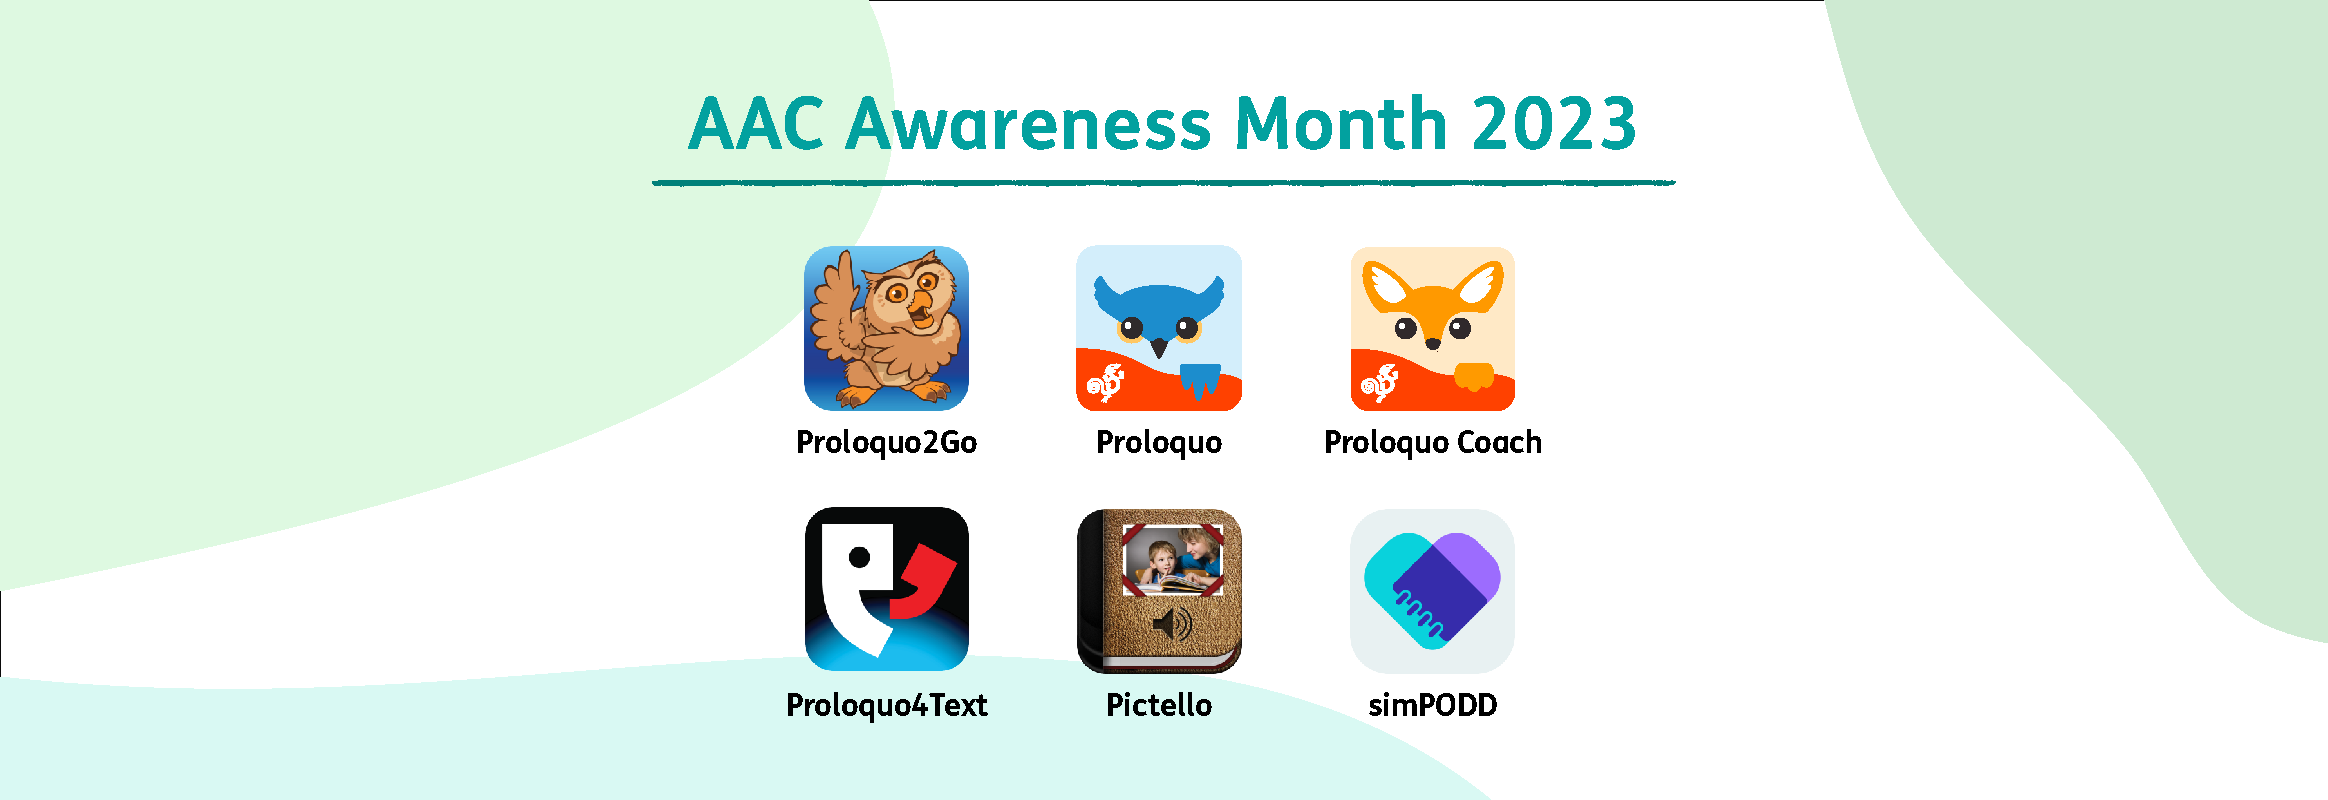 AAC Awareness Month 2023 - Proloquo2Go, Proloquo, Proloquo Coach, Proloquo4Text, Pictello,simPODD